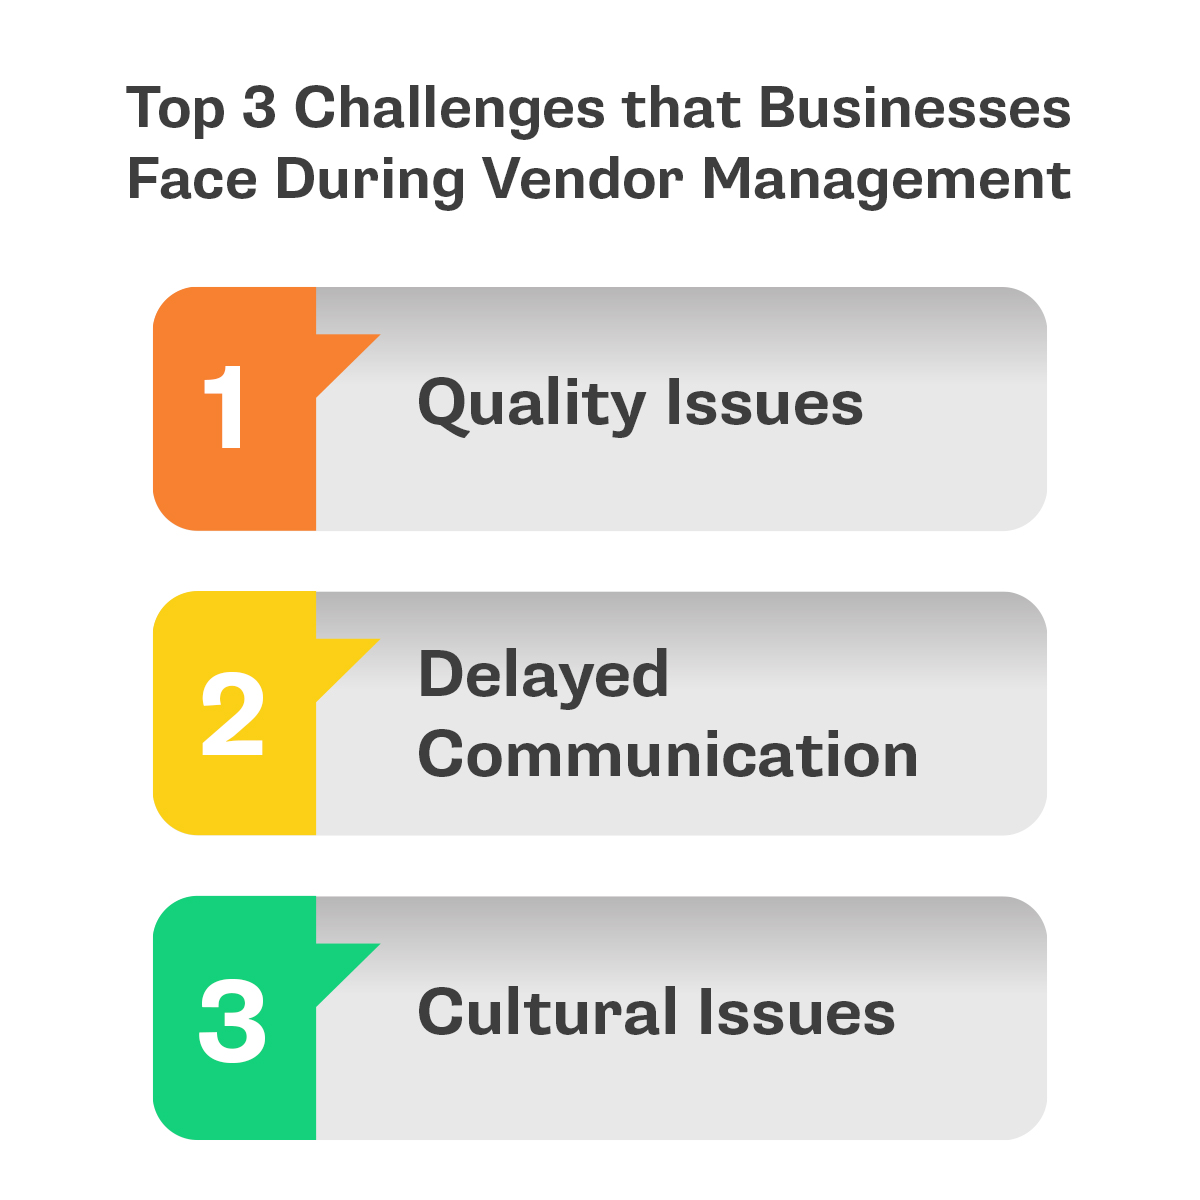 Top 3 Challenges that Businesses face during vendor management.